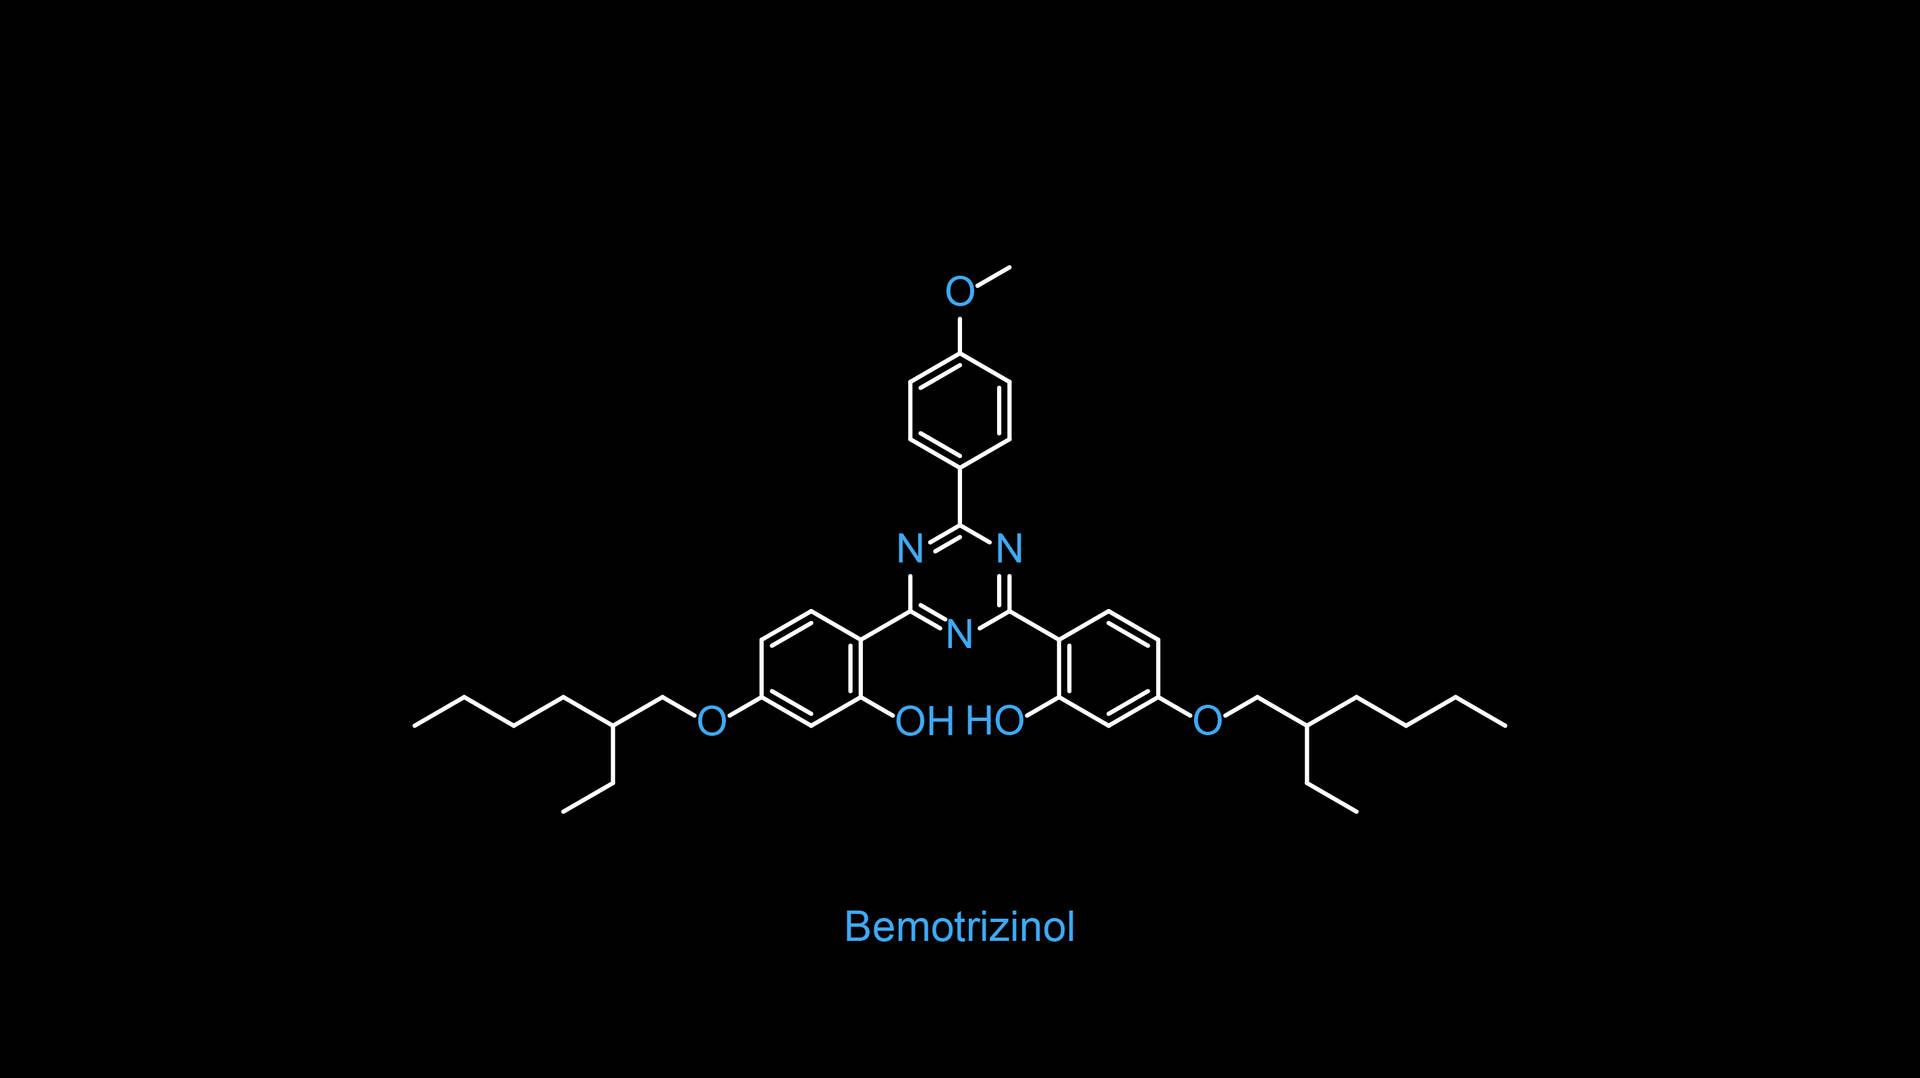 Chemistry Bemotrizinol Chemical Formula Wallpaper